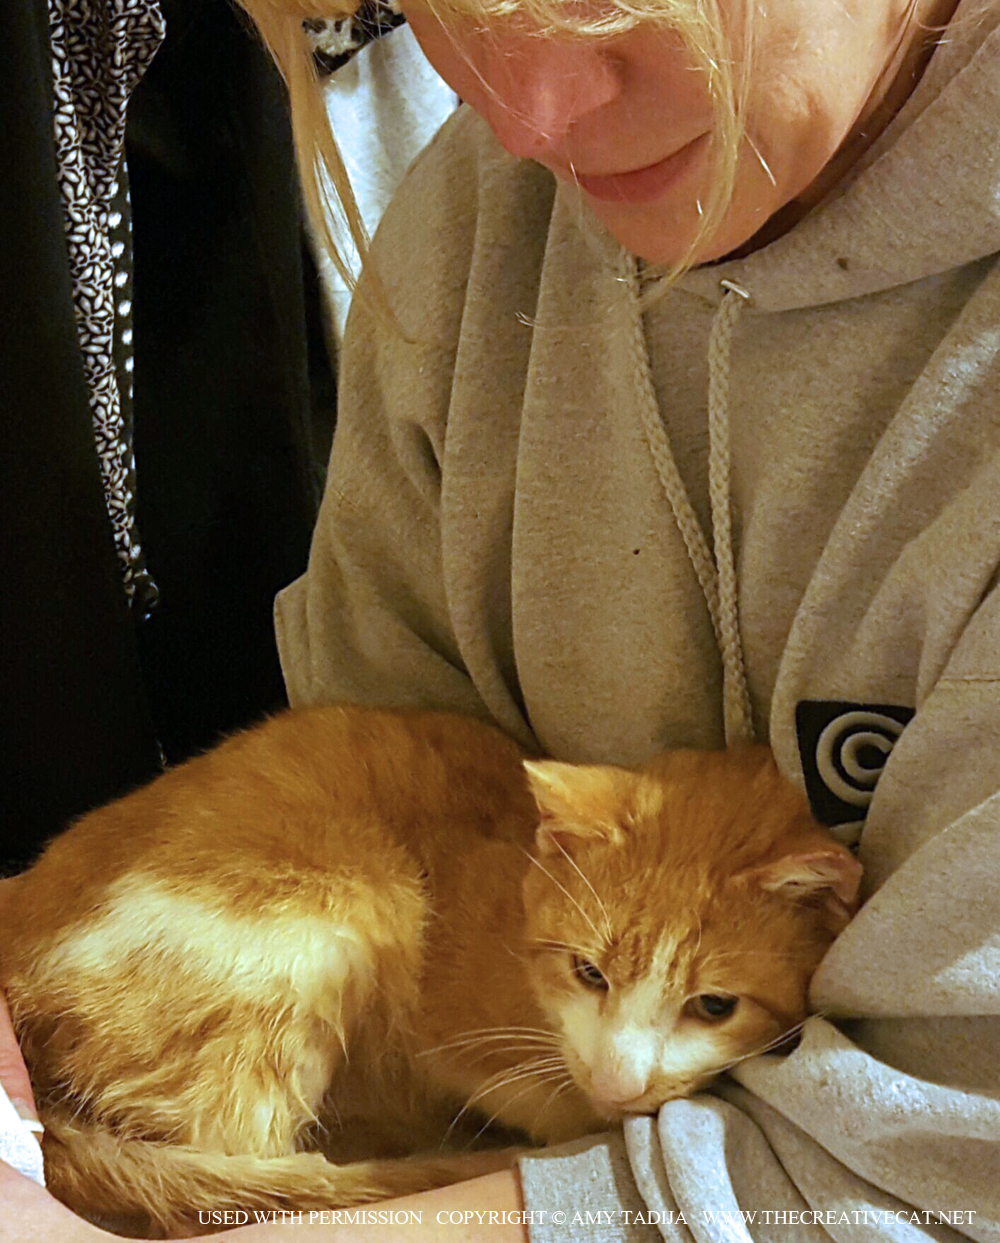 Toby on Amy's lap.